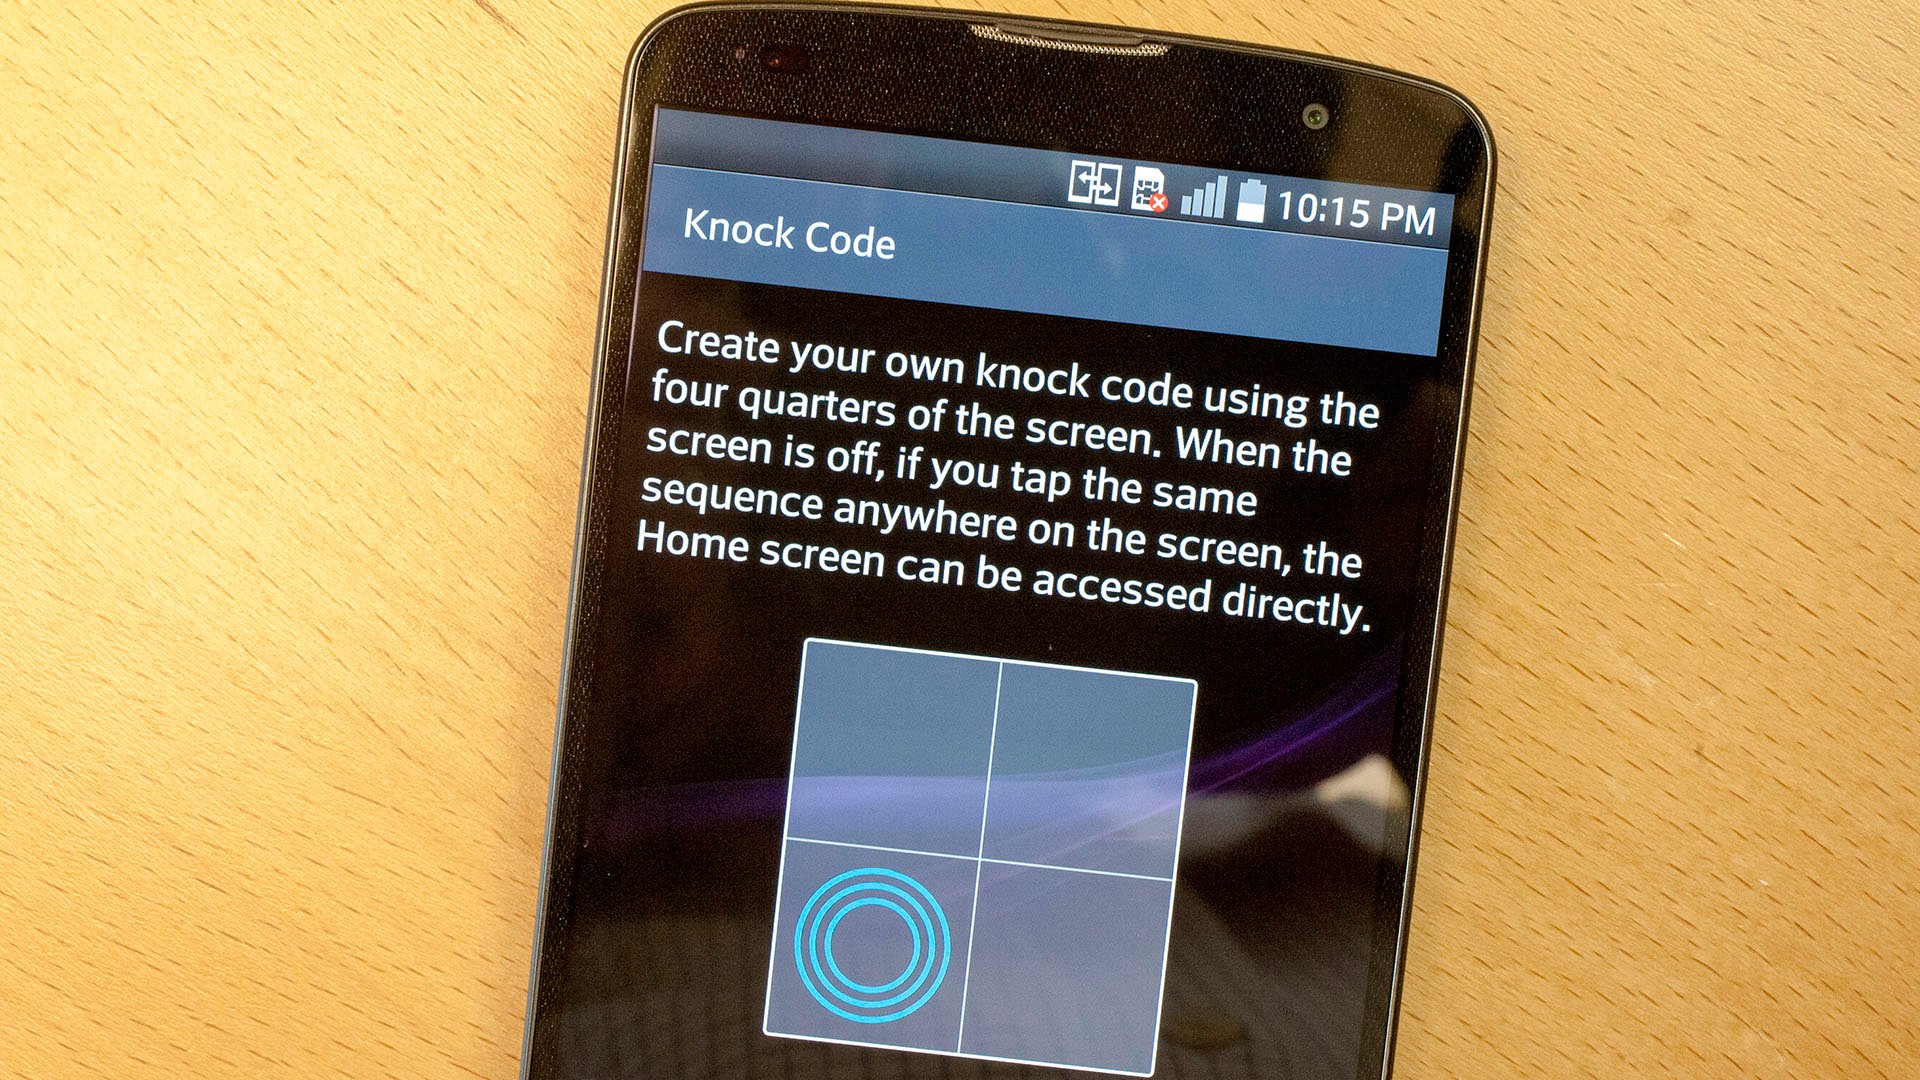 LG G Pro 2 Knock Code